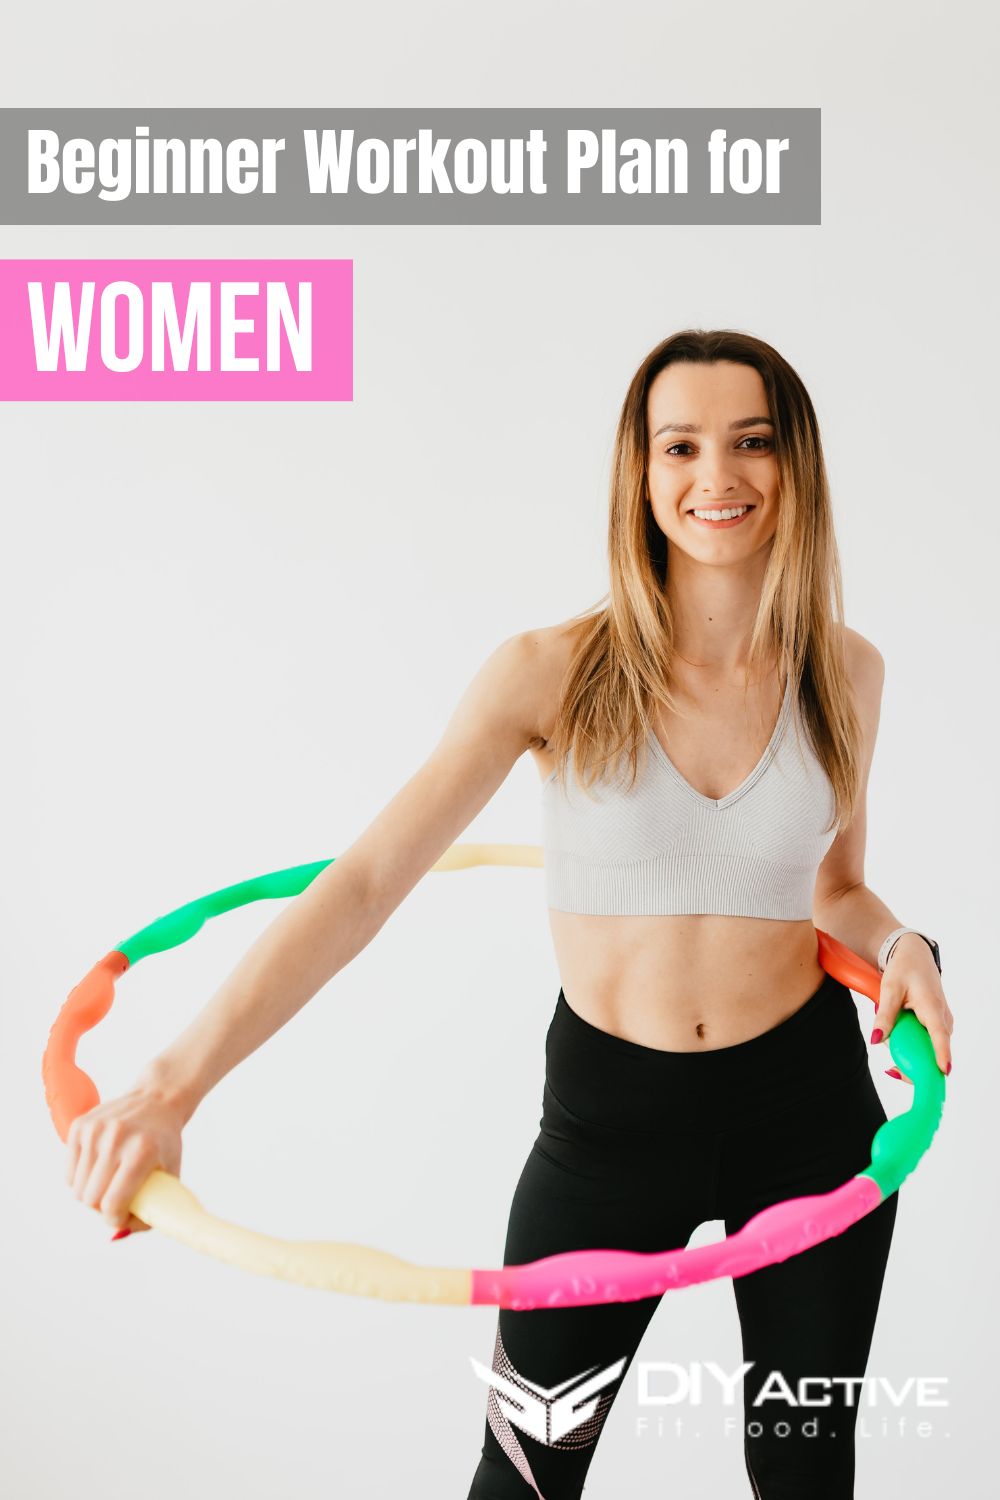 Back to the Basics: Beginner Workout Plan for Women